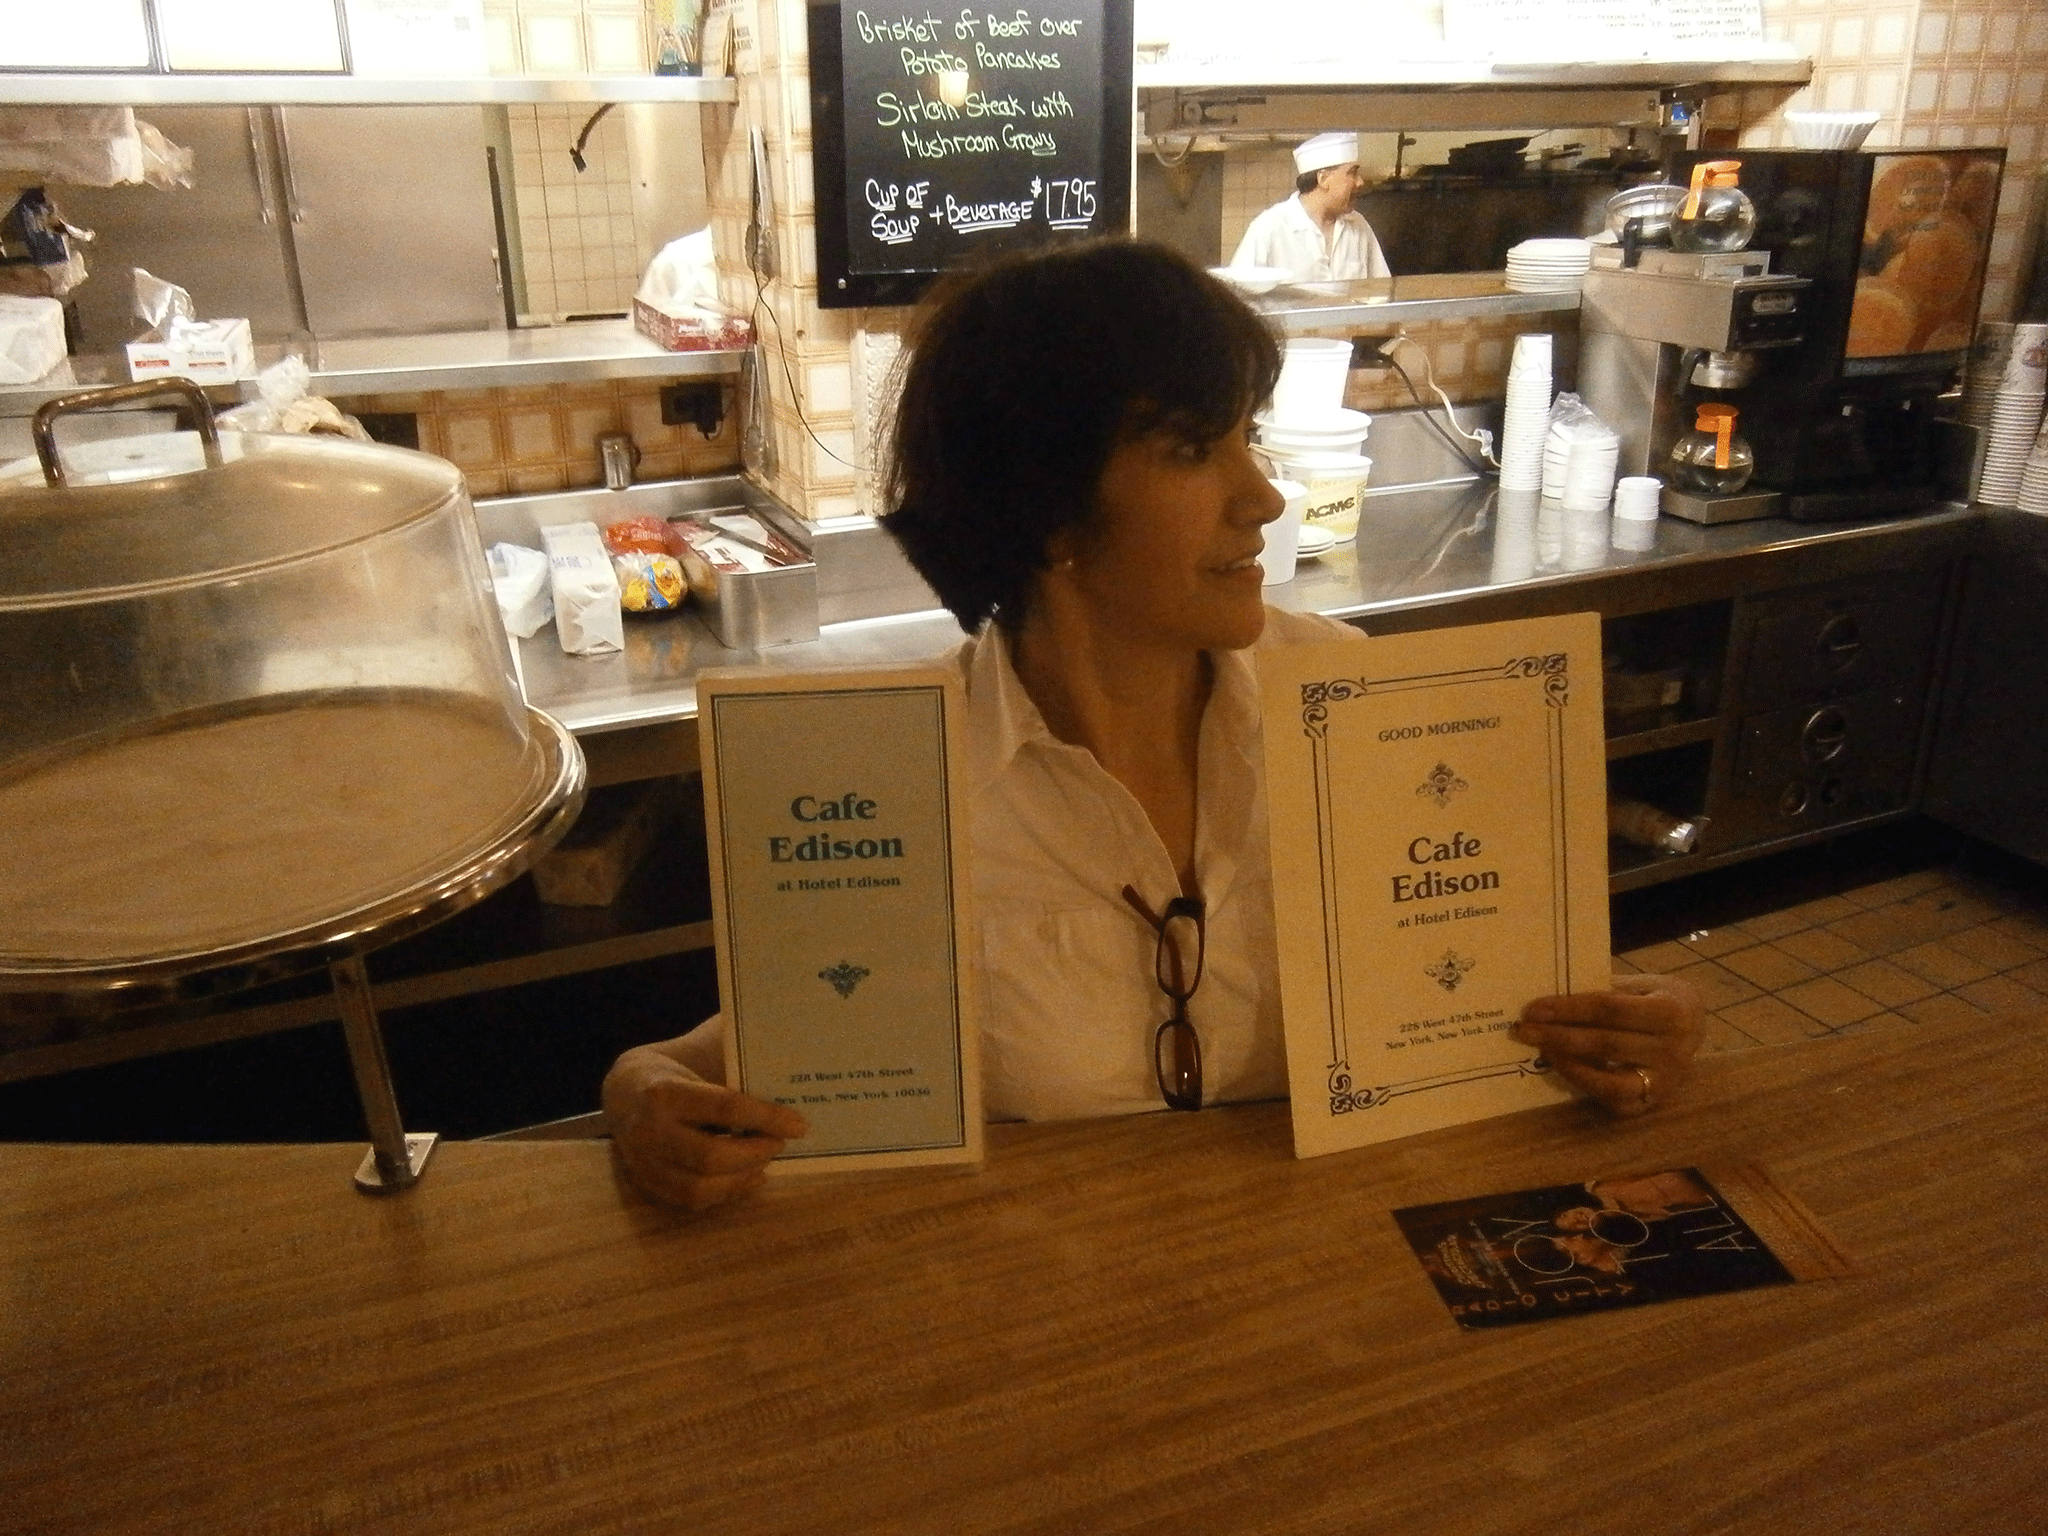 Waitress Luz Taylor displays menus at New York's Cafe Edison